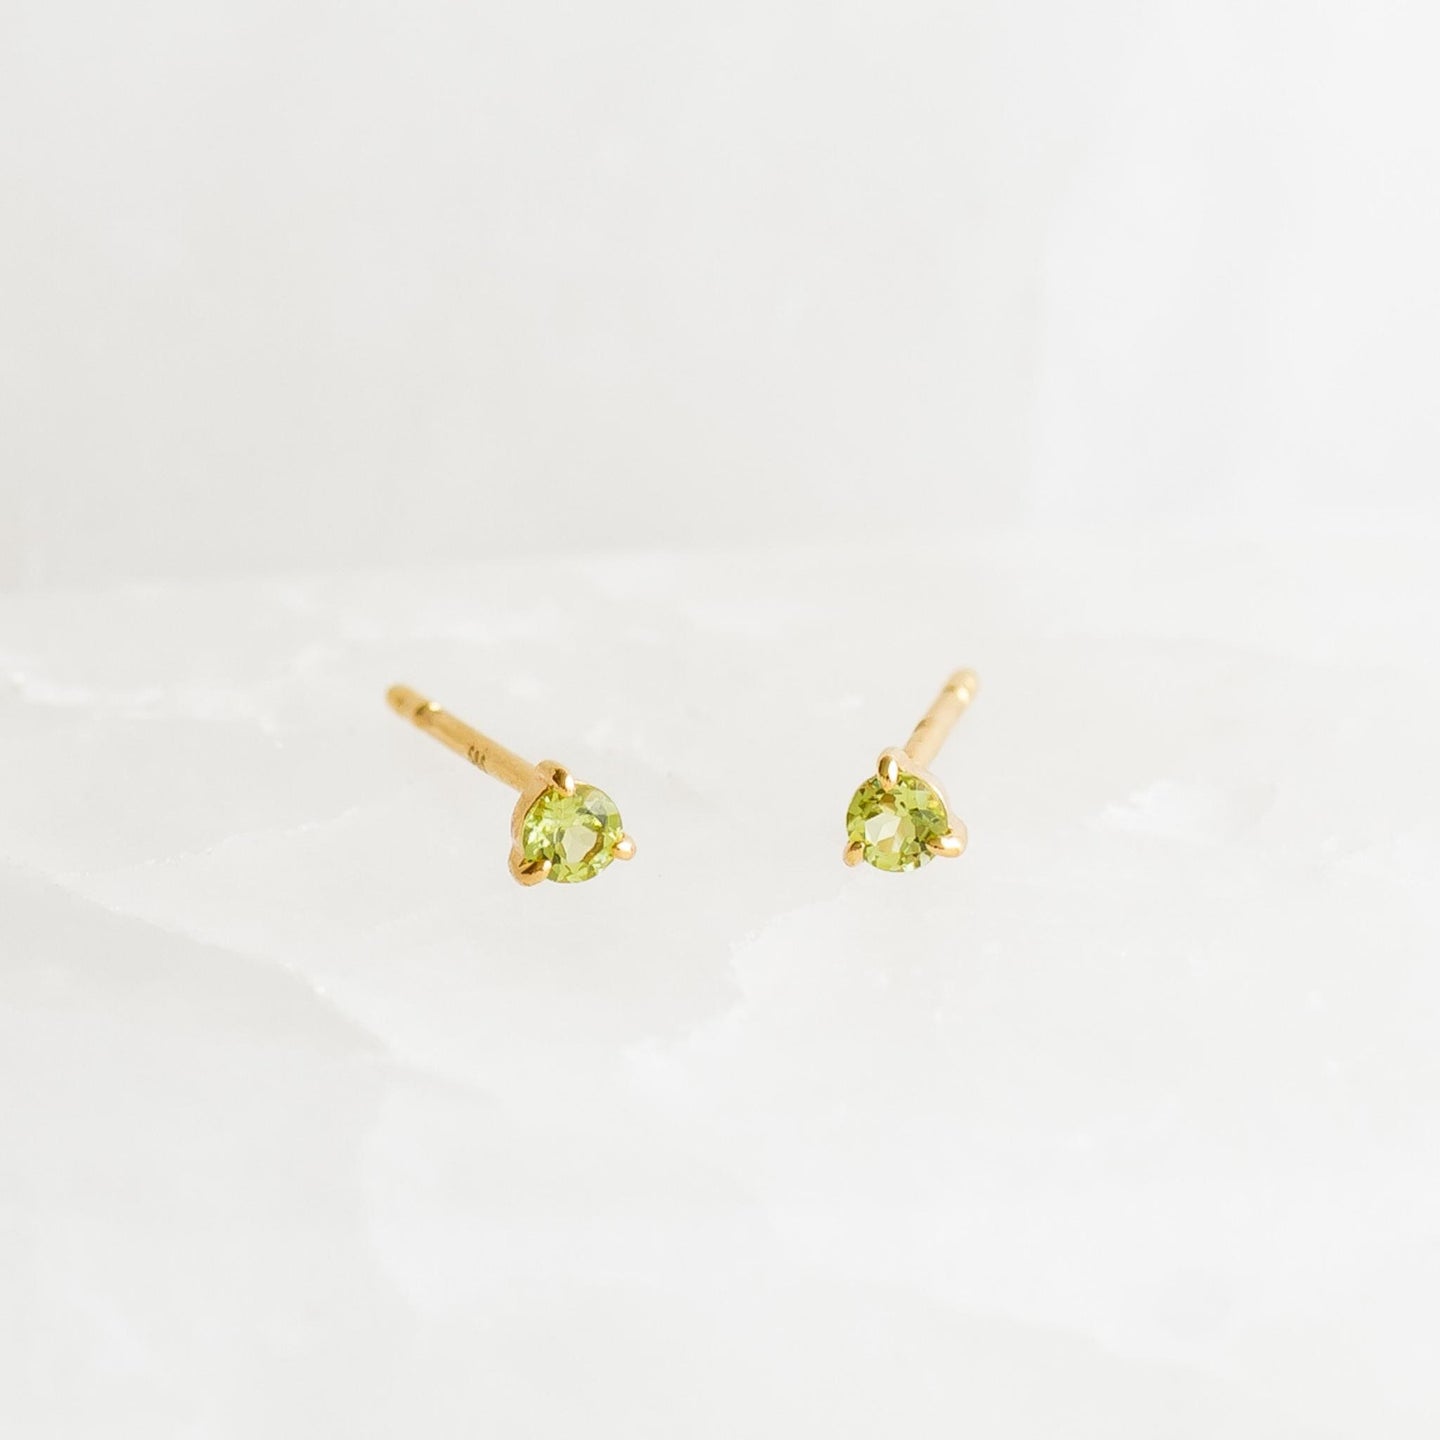 August Birthstone Stud Earrings 14k Gold - Olivine